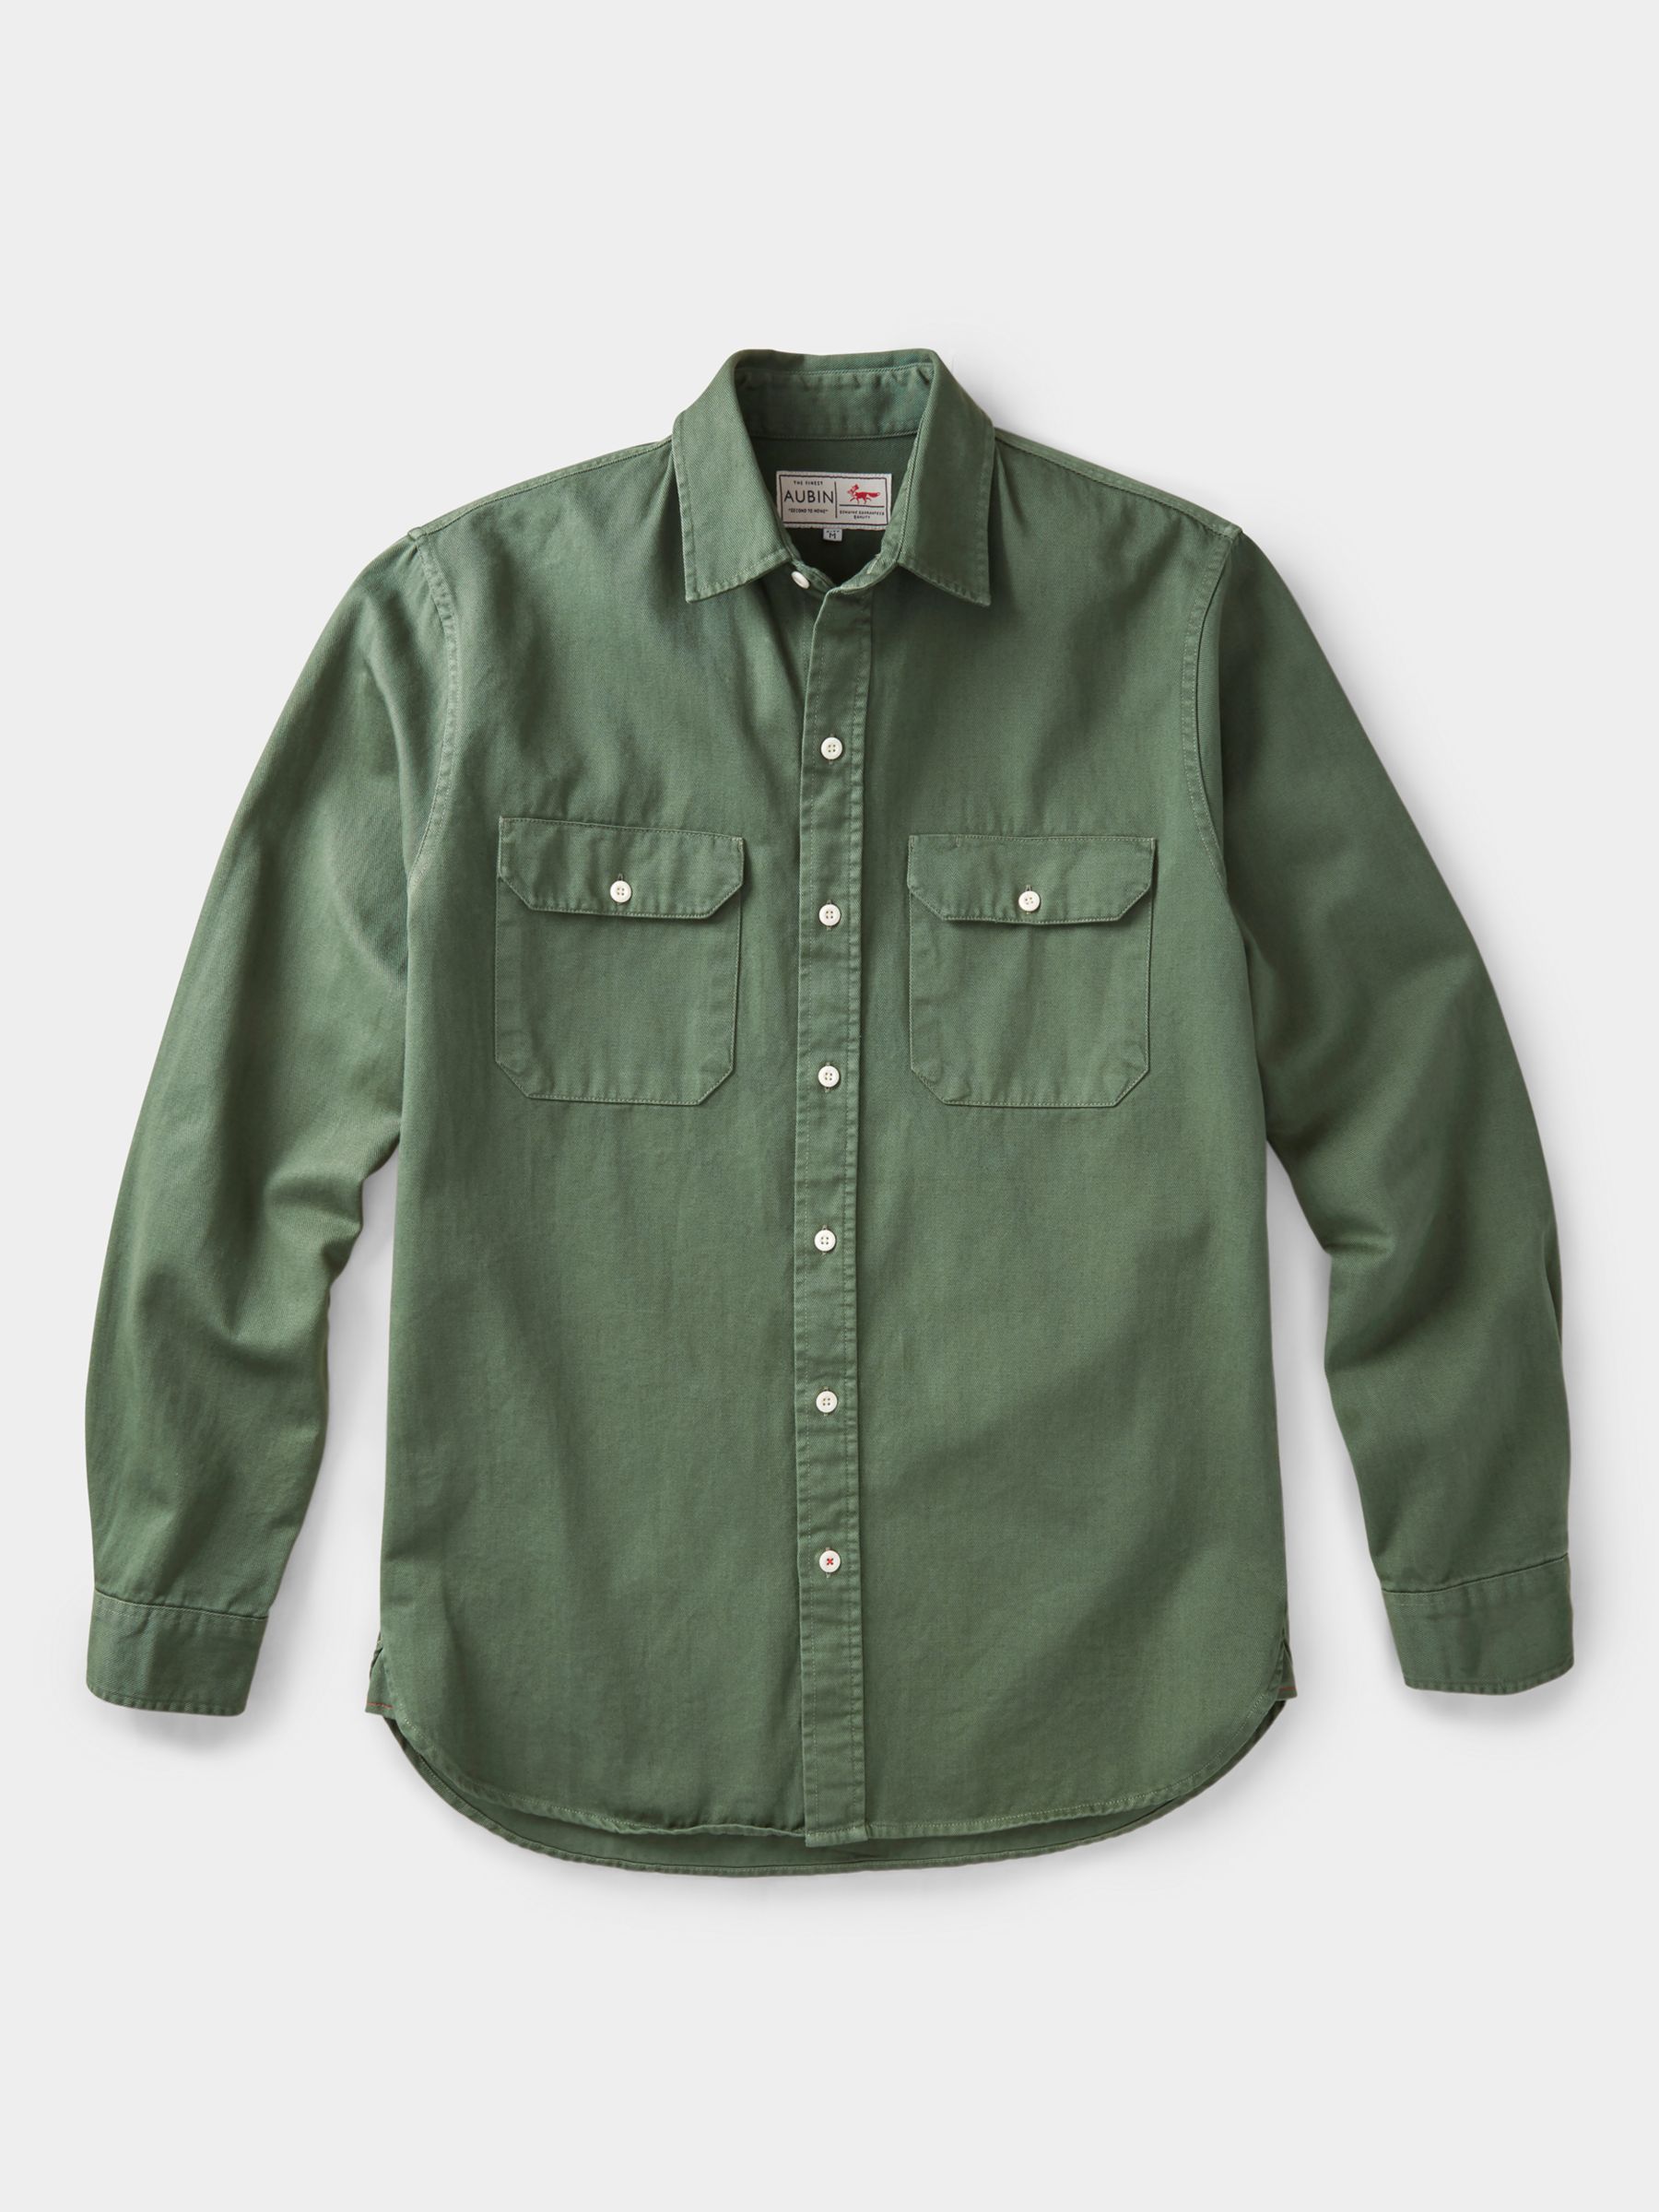 Aubin Normanby Cotton Twill Shirt, Khaki, S